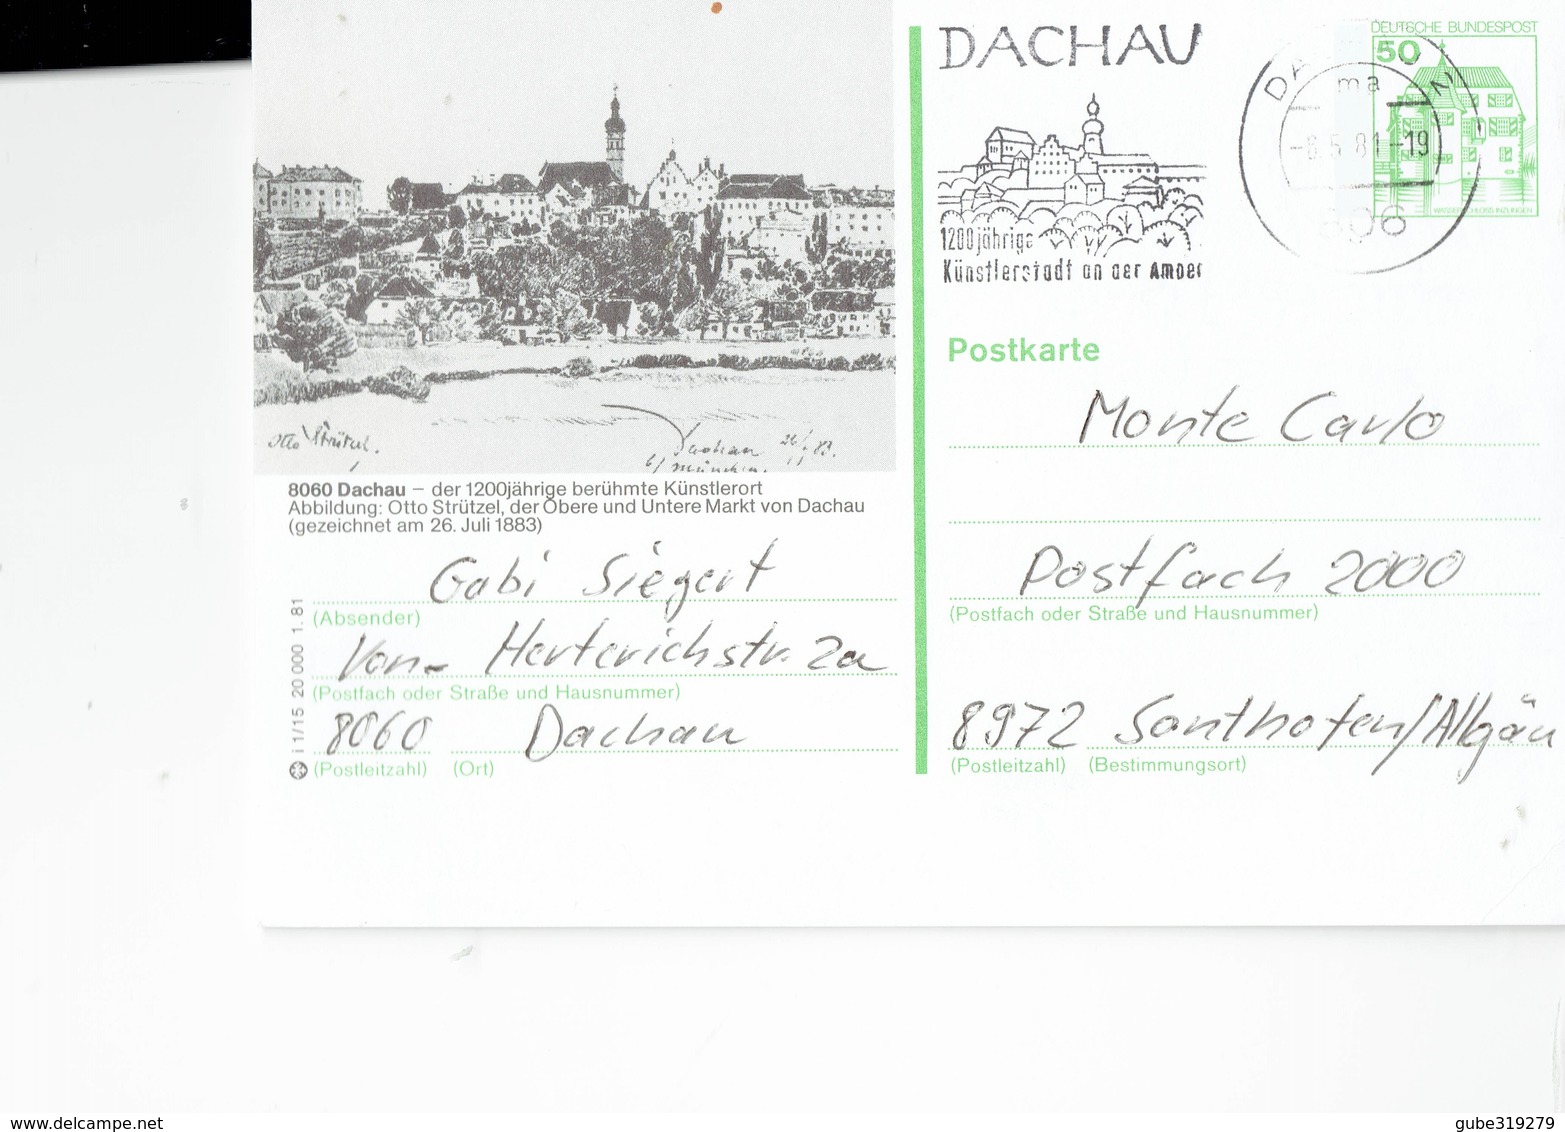 GERMANY 1981 - DACHAU  -POSTKARTE -OBL  "1200 JAHRIGA KUNSTELRRSTADT AM DER ,..." 8.5.1981 - DER 1200 JAHRE BERUHMTE KUN - Dachau